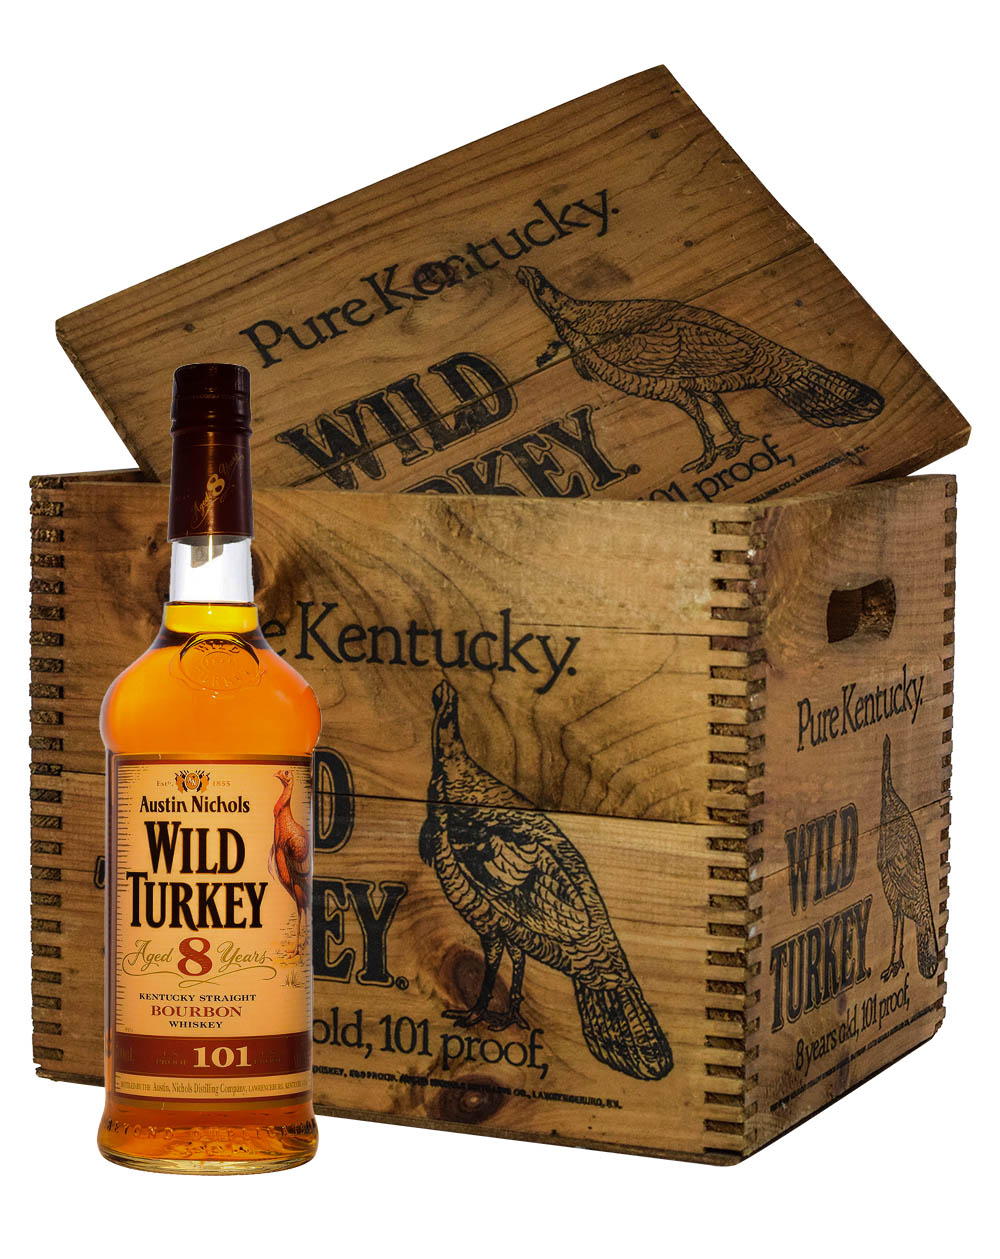 https://www.musthavemalts.com/wp-content/uploads/2022/06/Wild-Turkey-Wooden-Crate-Bottle-Must-Have-Malts-MHM.jpg